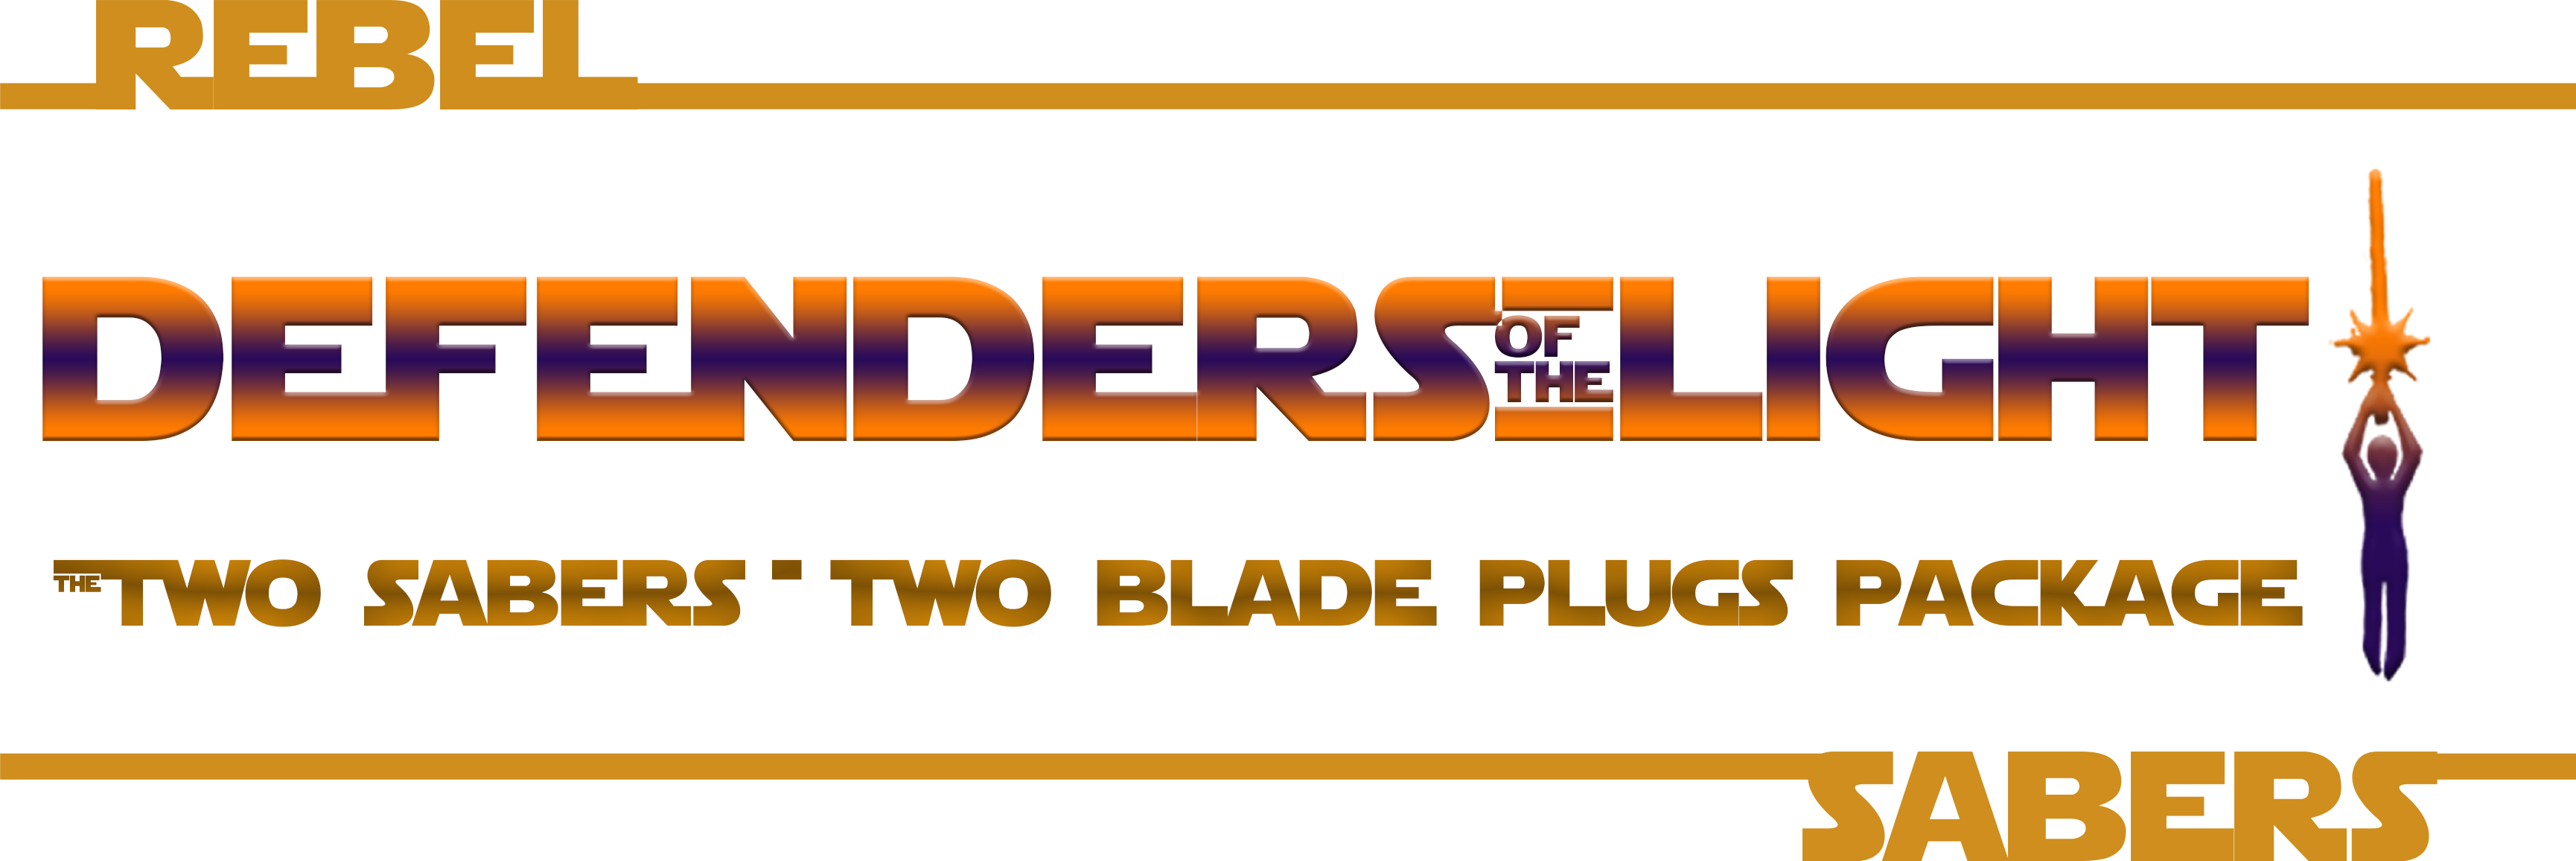 Defenders of the Light | 2 Sabers & 2 Blade Plugs